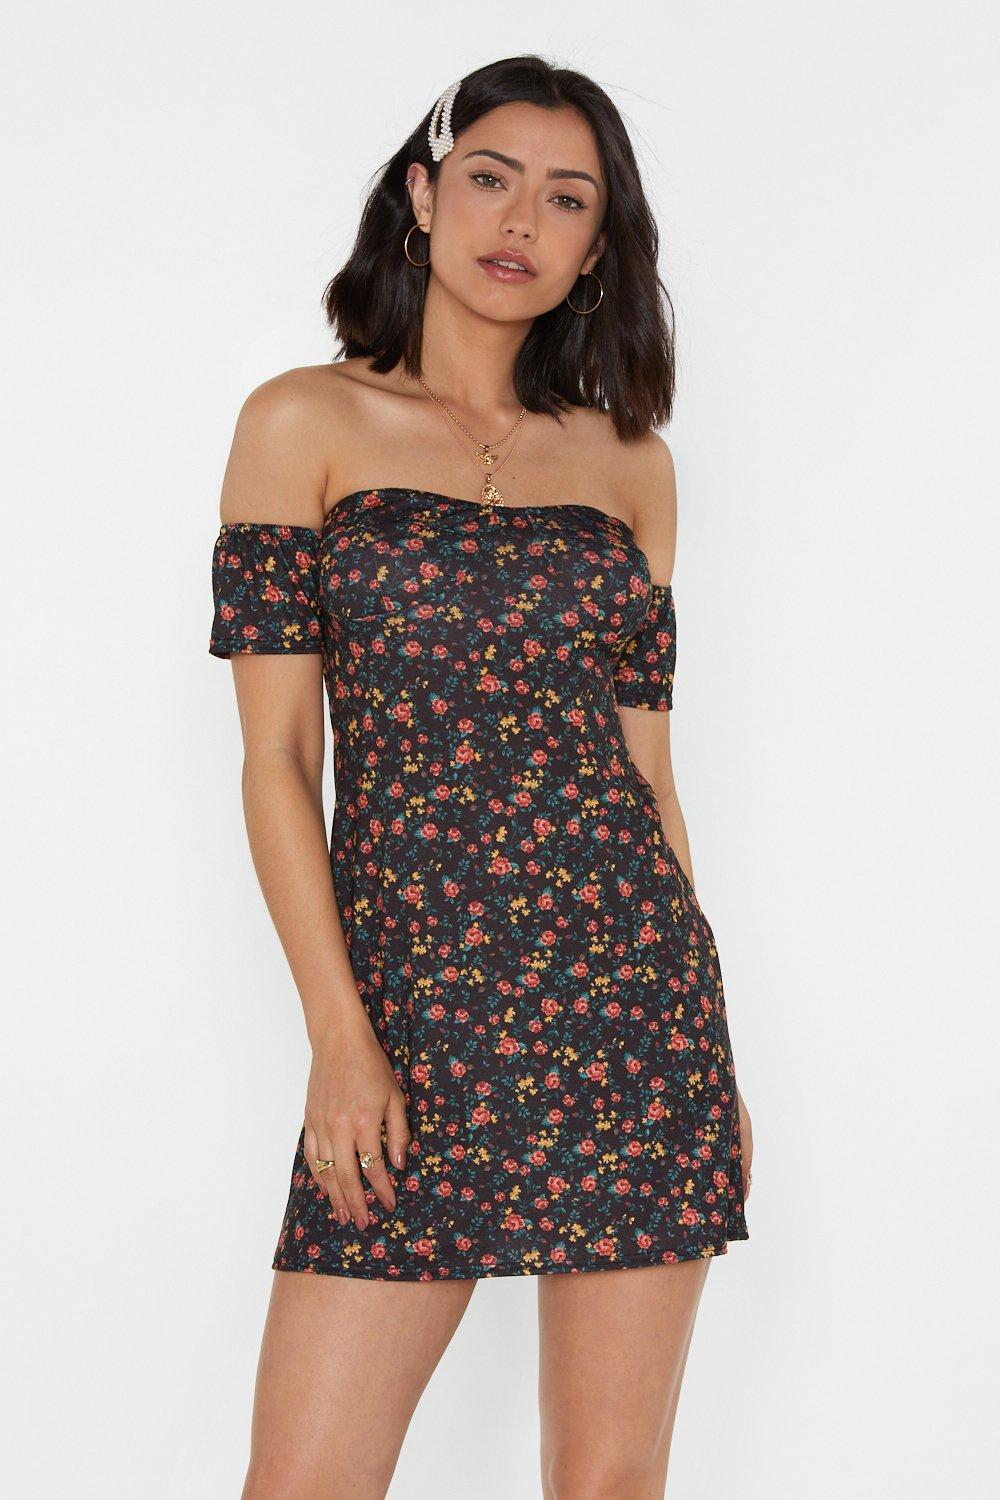 nite dress online shopping